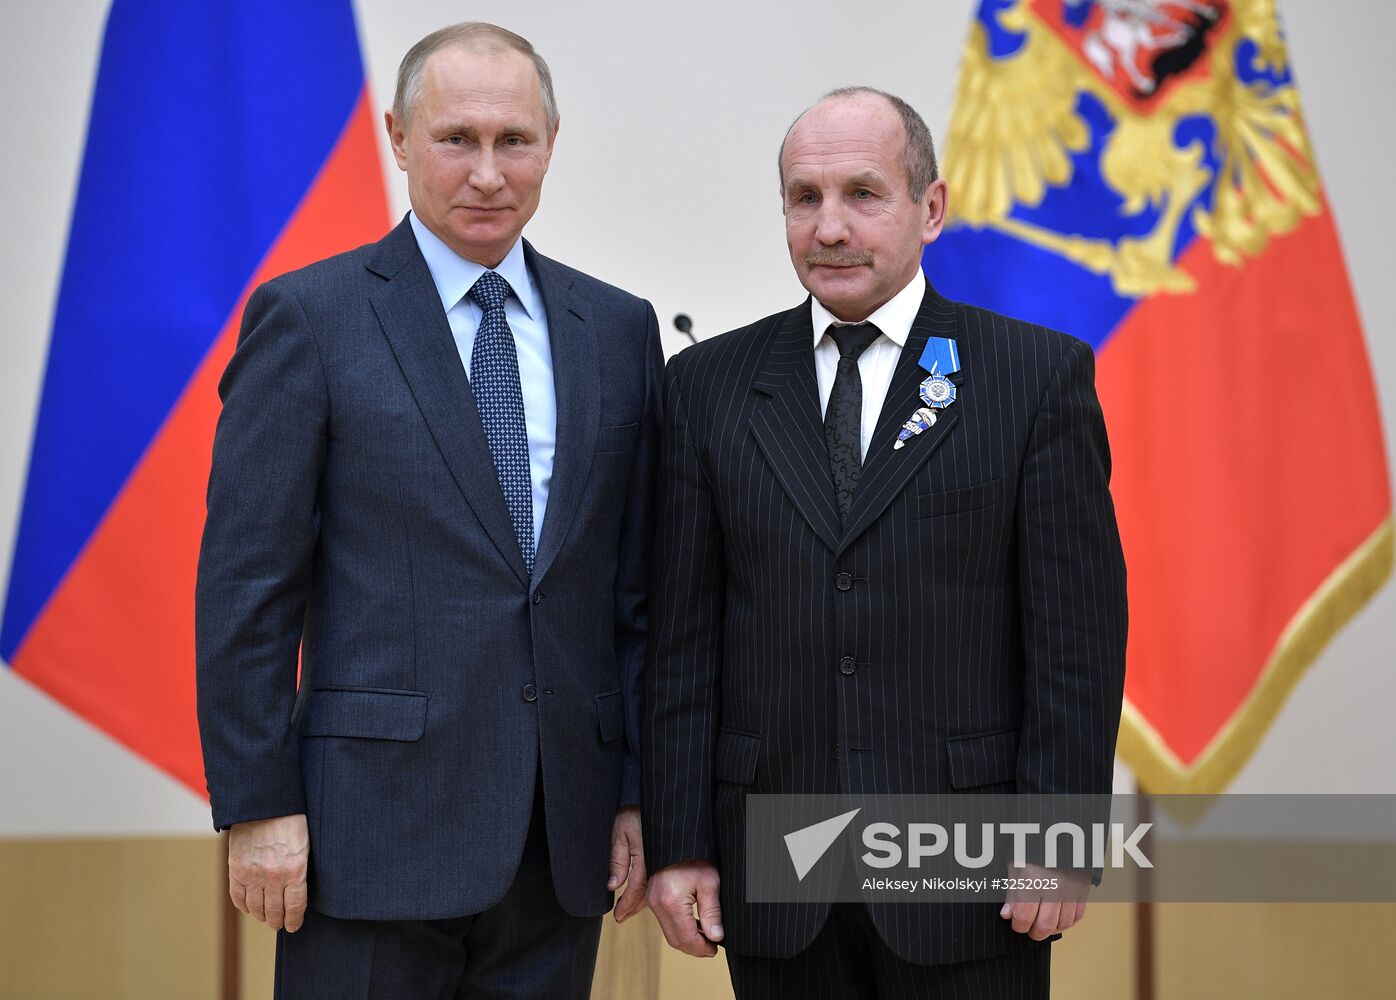 President Putin presents state awards to Rostec Corporation employees